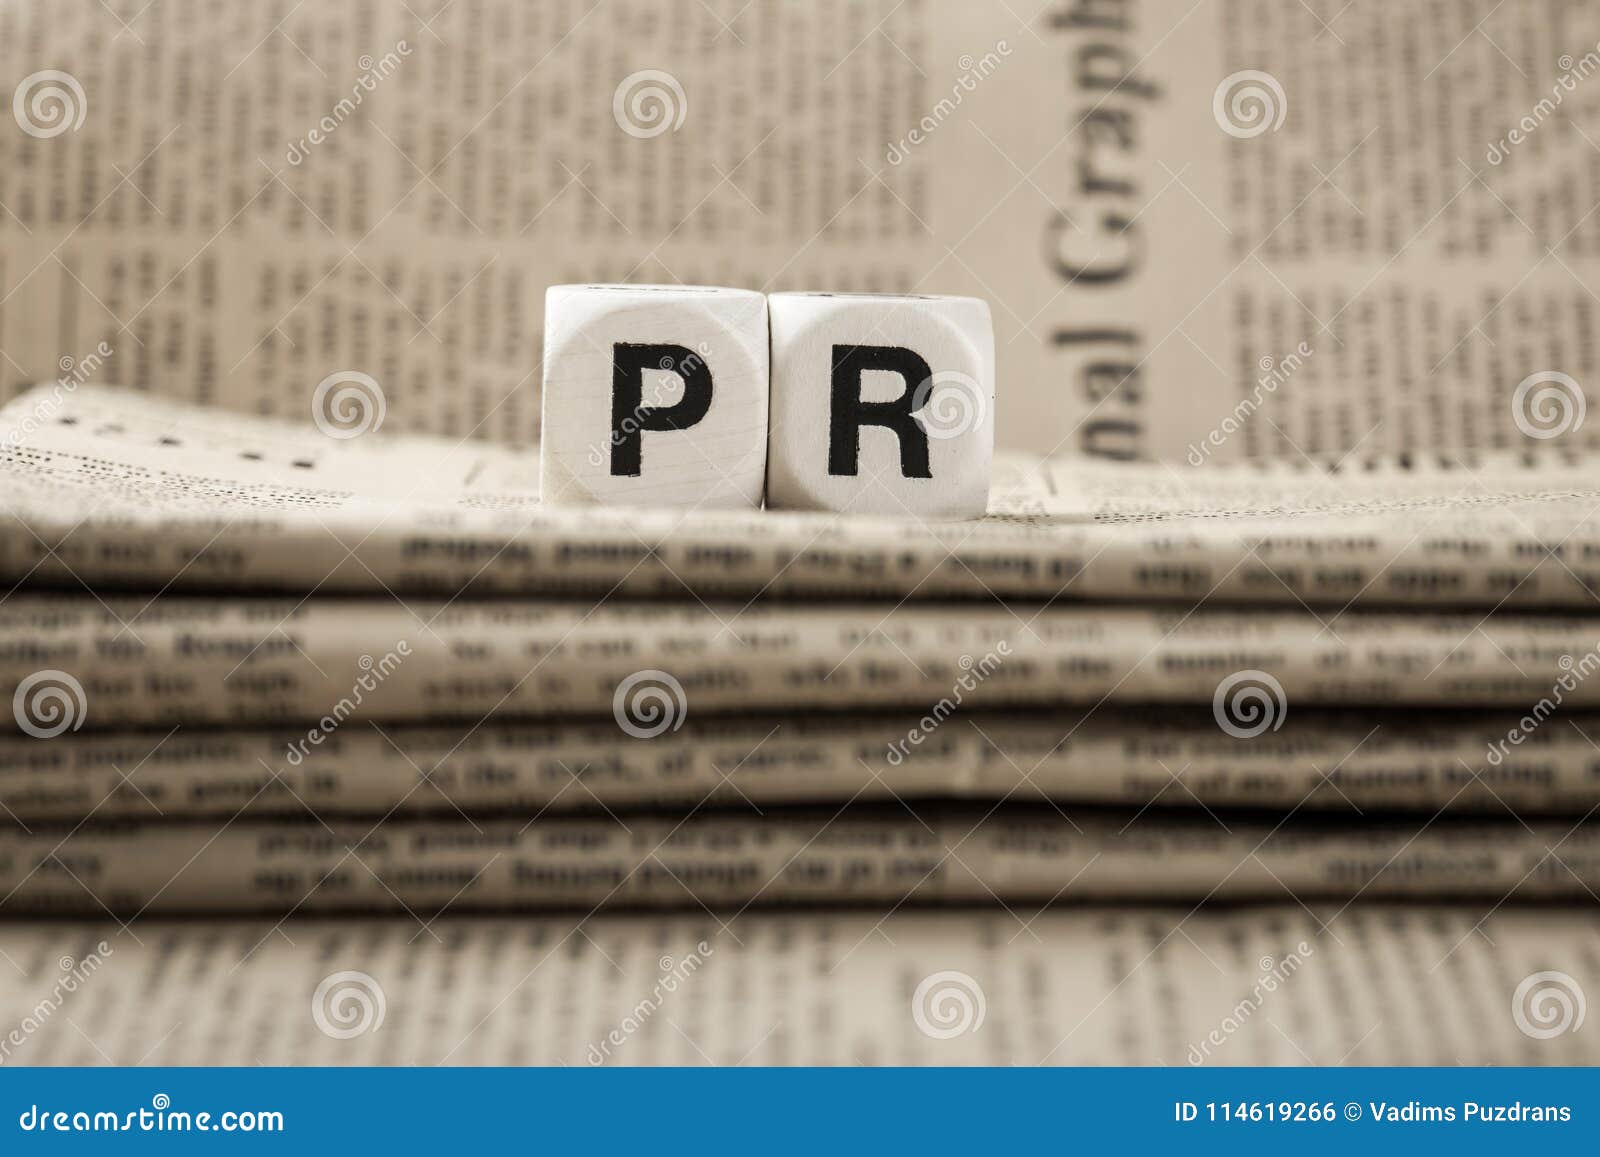 abbreviation pr on newspapers